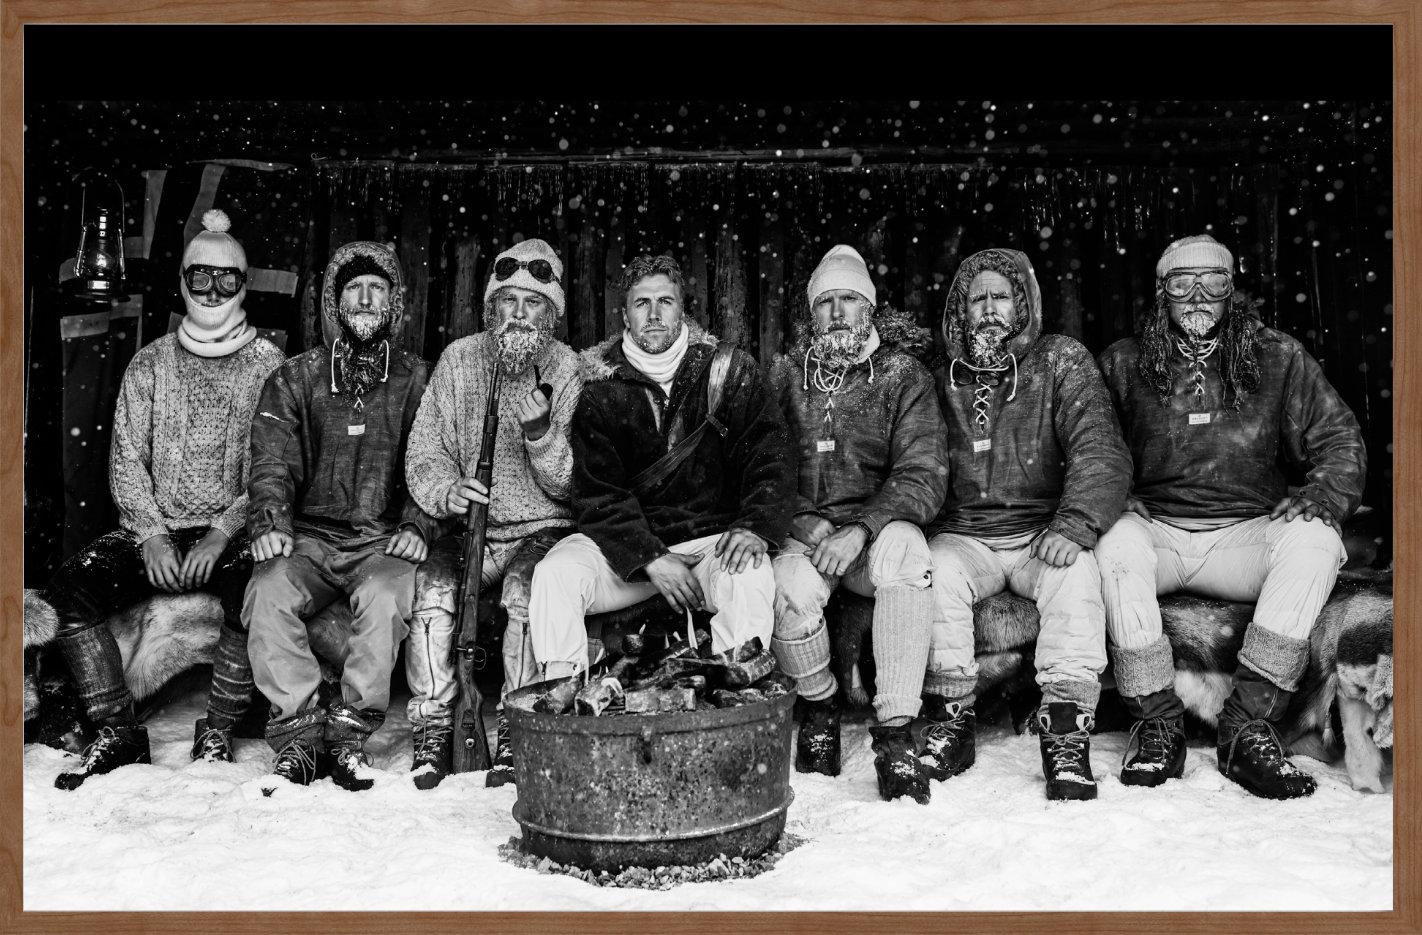 Base Camp - World's Leading Alpine Ski Racer Aleksander Kilde Polar Exhibition - Contemporary Photograph by David Yarrow